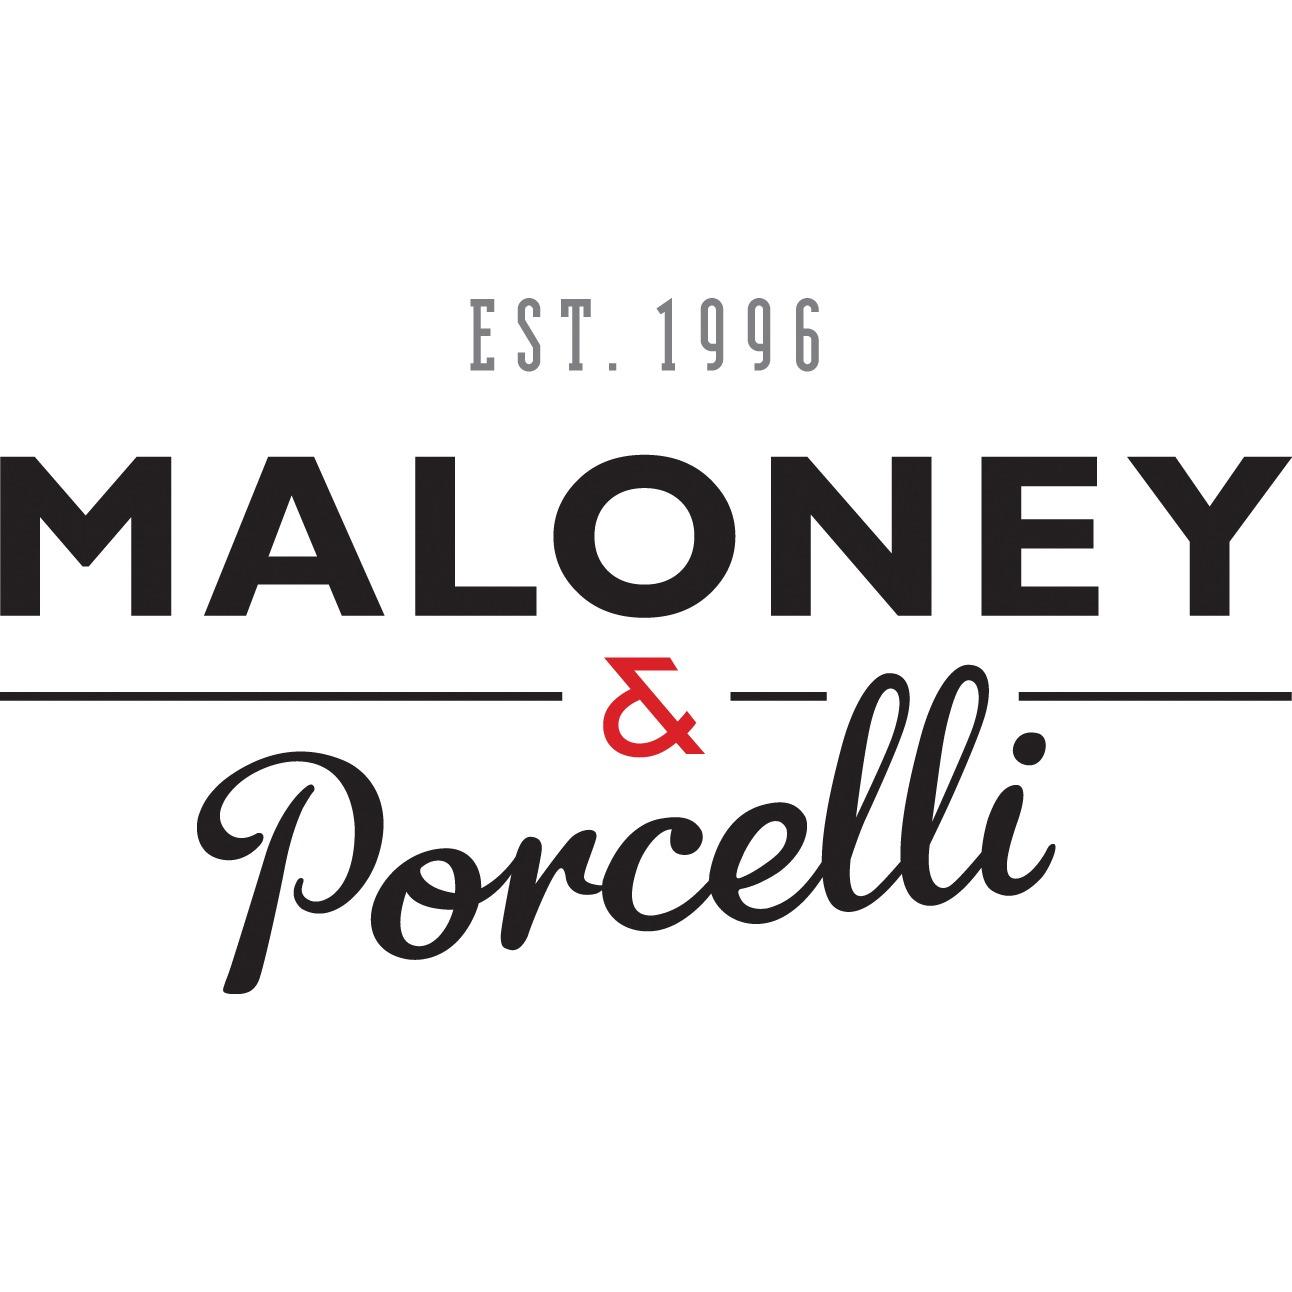 Maloney & Porcelli Logo